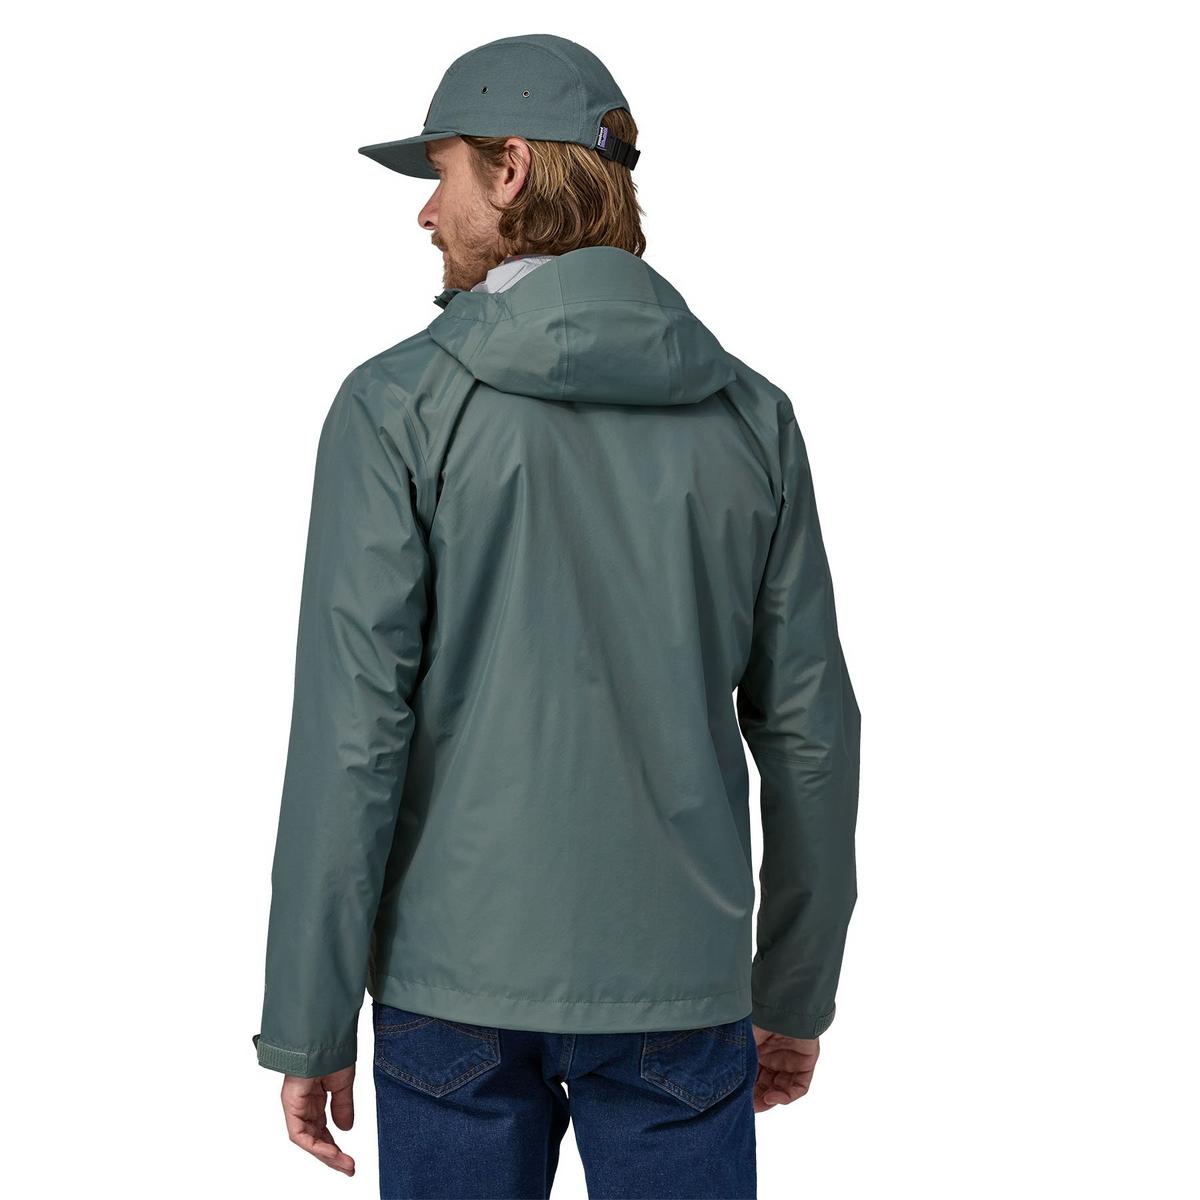 Patagonia Men's Torrentshell 3L Rain Jacket - Green